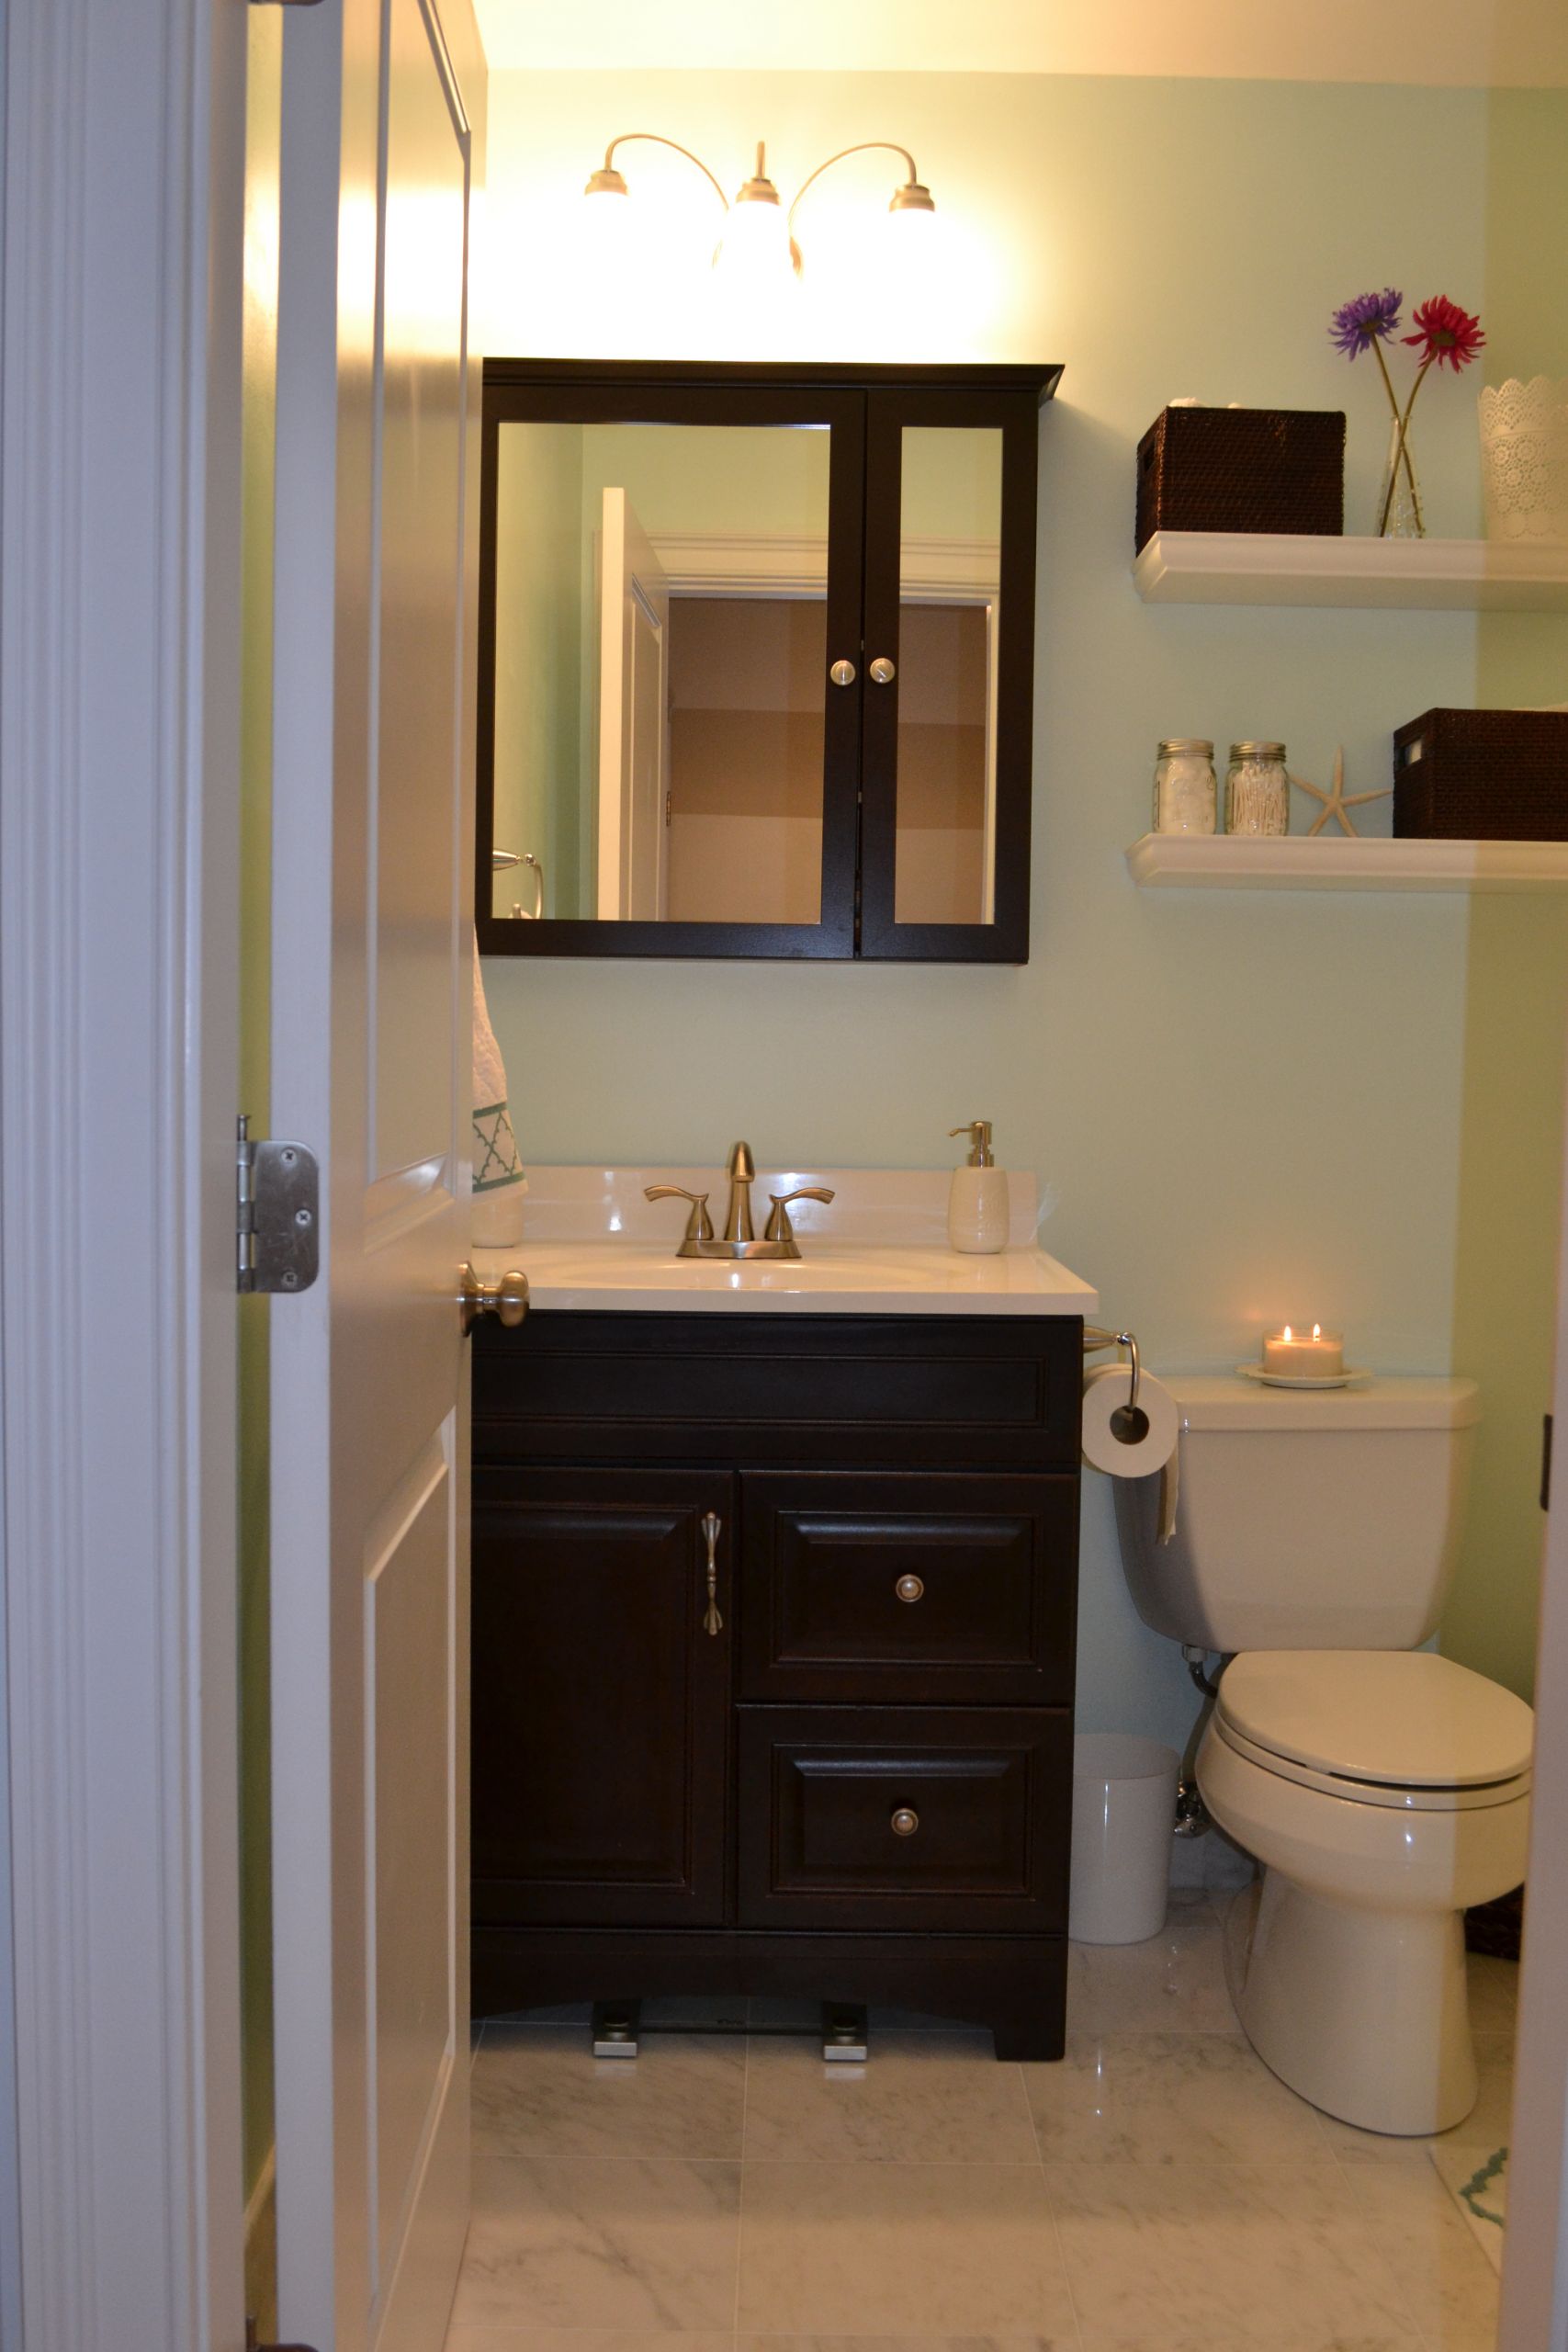 Bathroom Wall Cabinet Plans
 47 Best Bathroom Wall Storage Cabinets Designs & Ideas